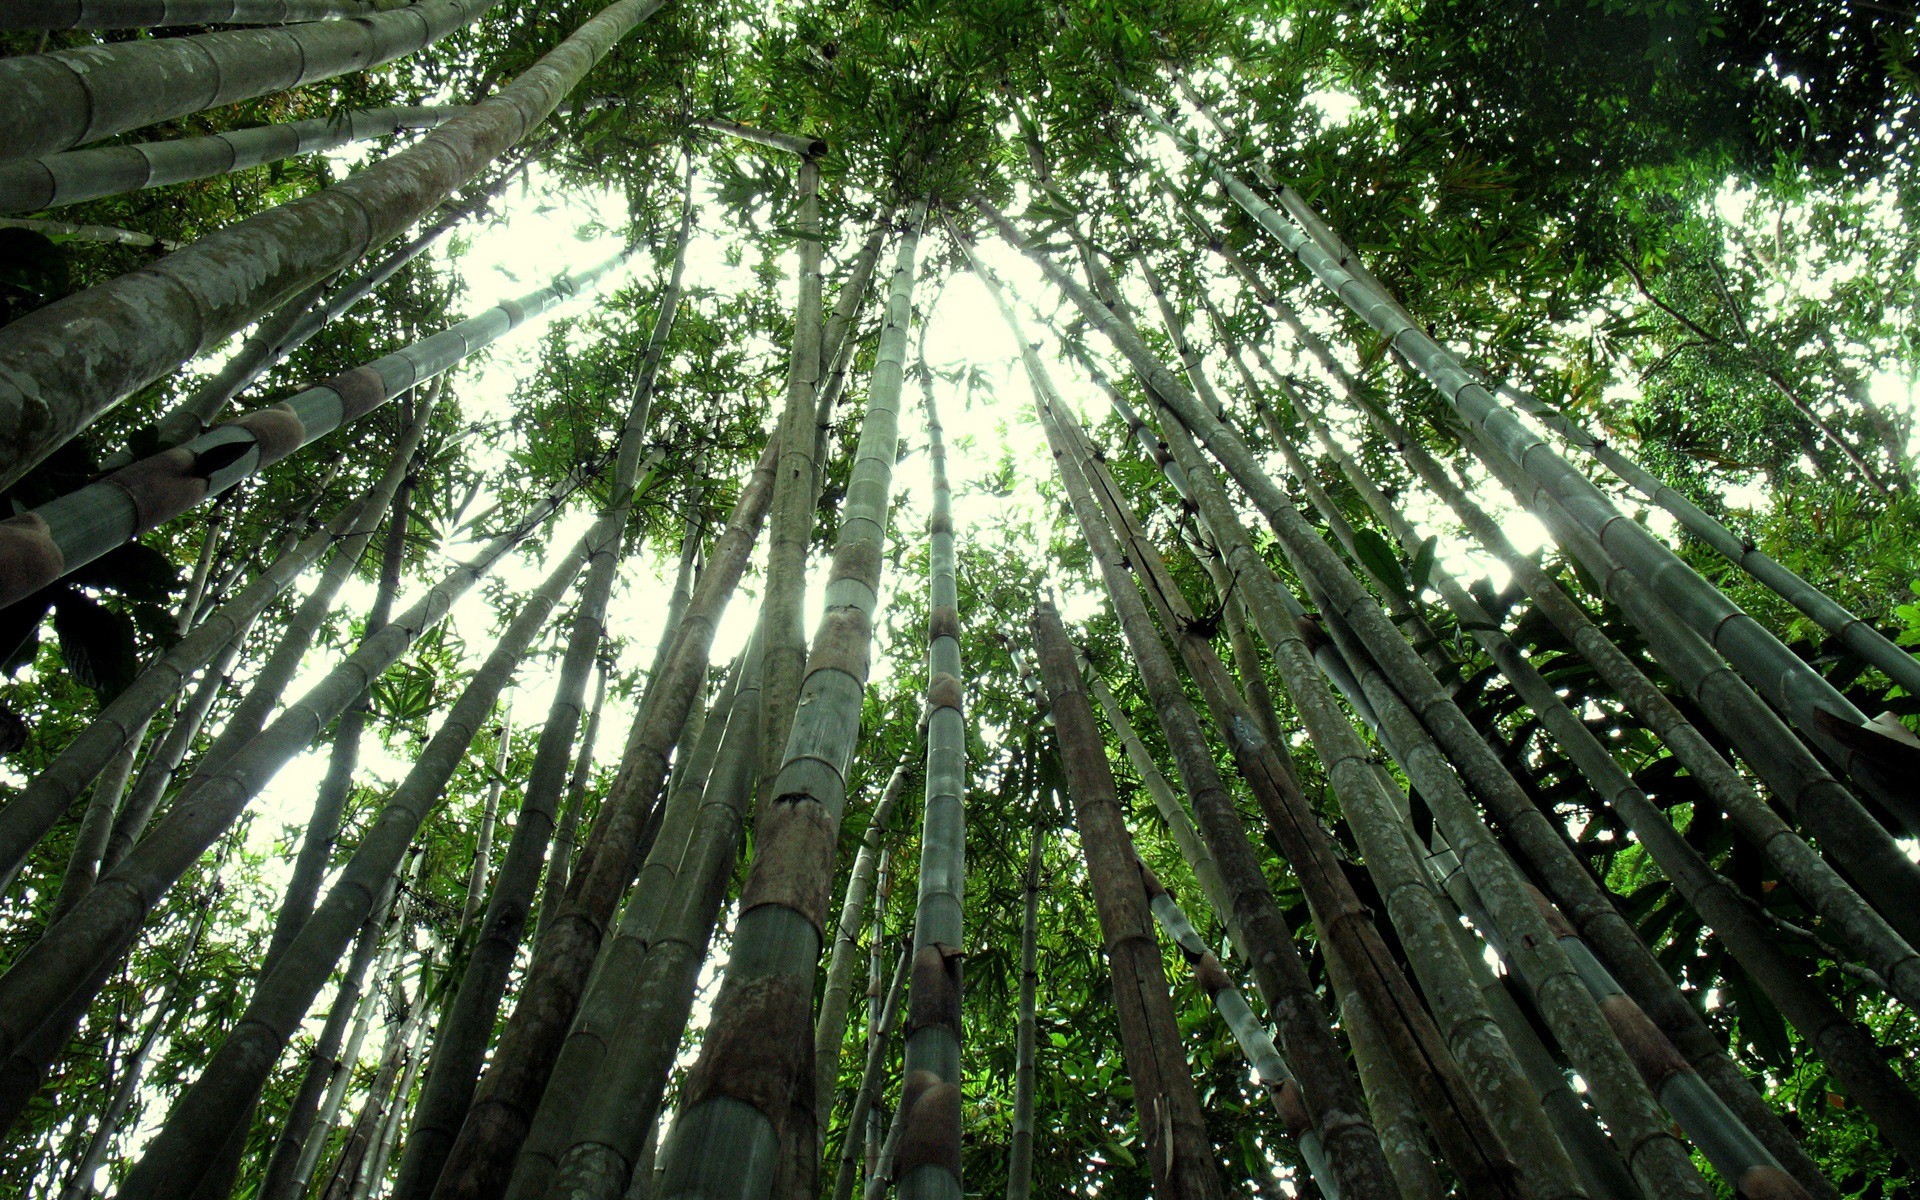 Bamboo Forest Wallpaper Landscape Nature